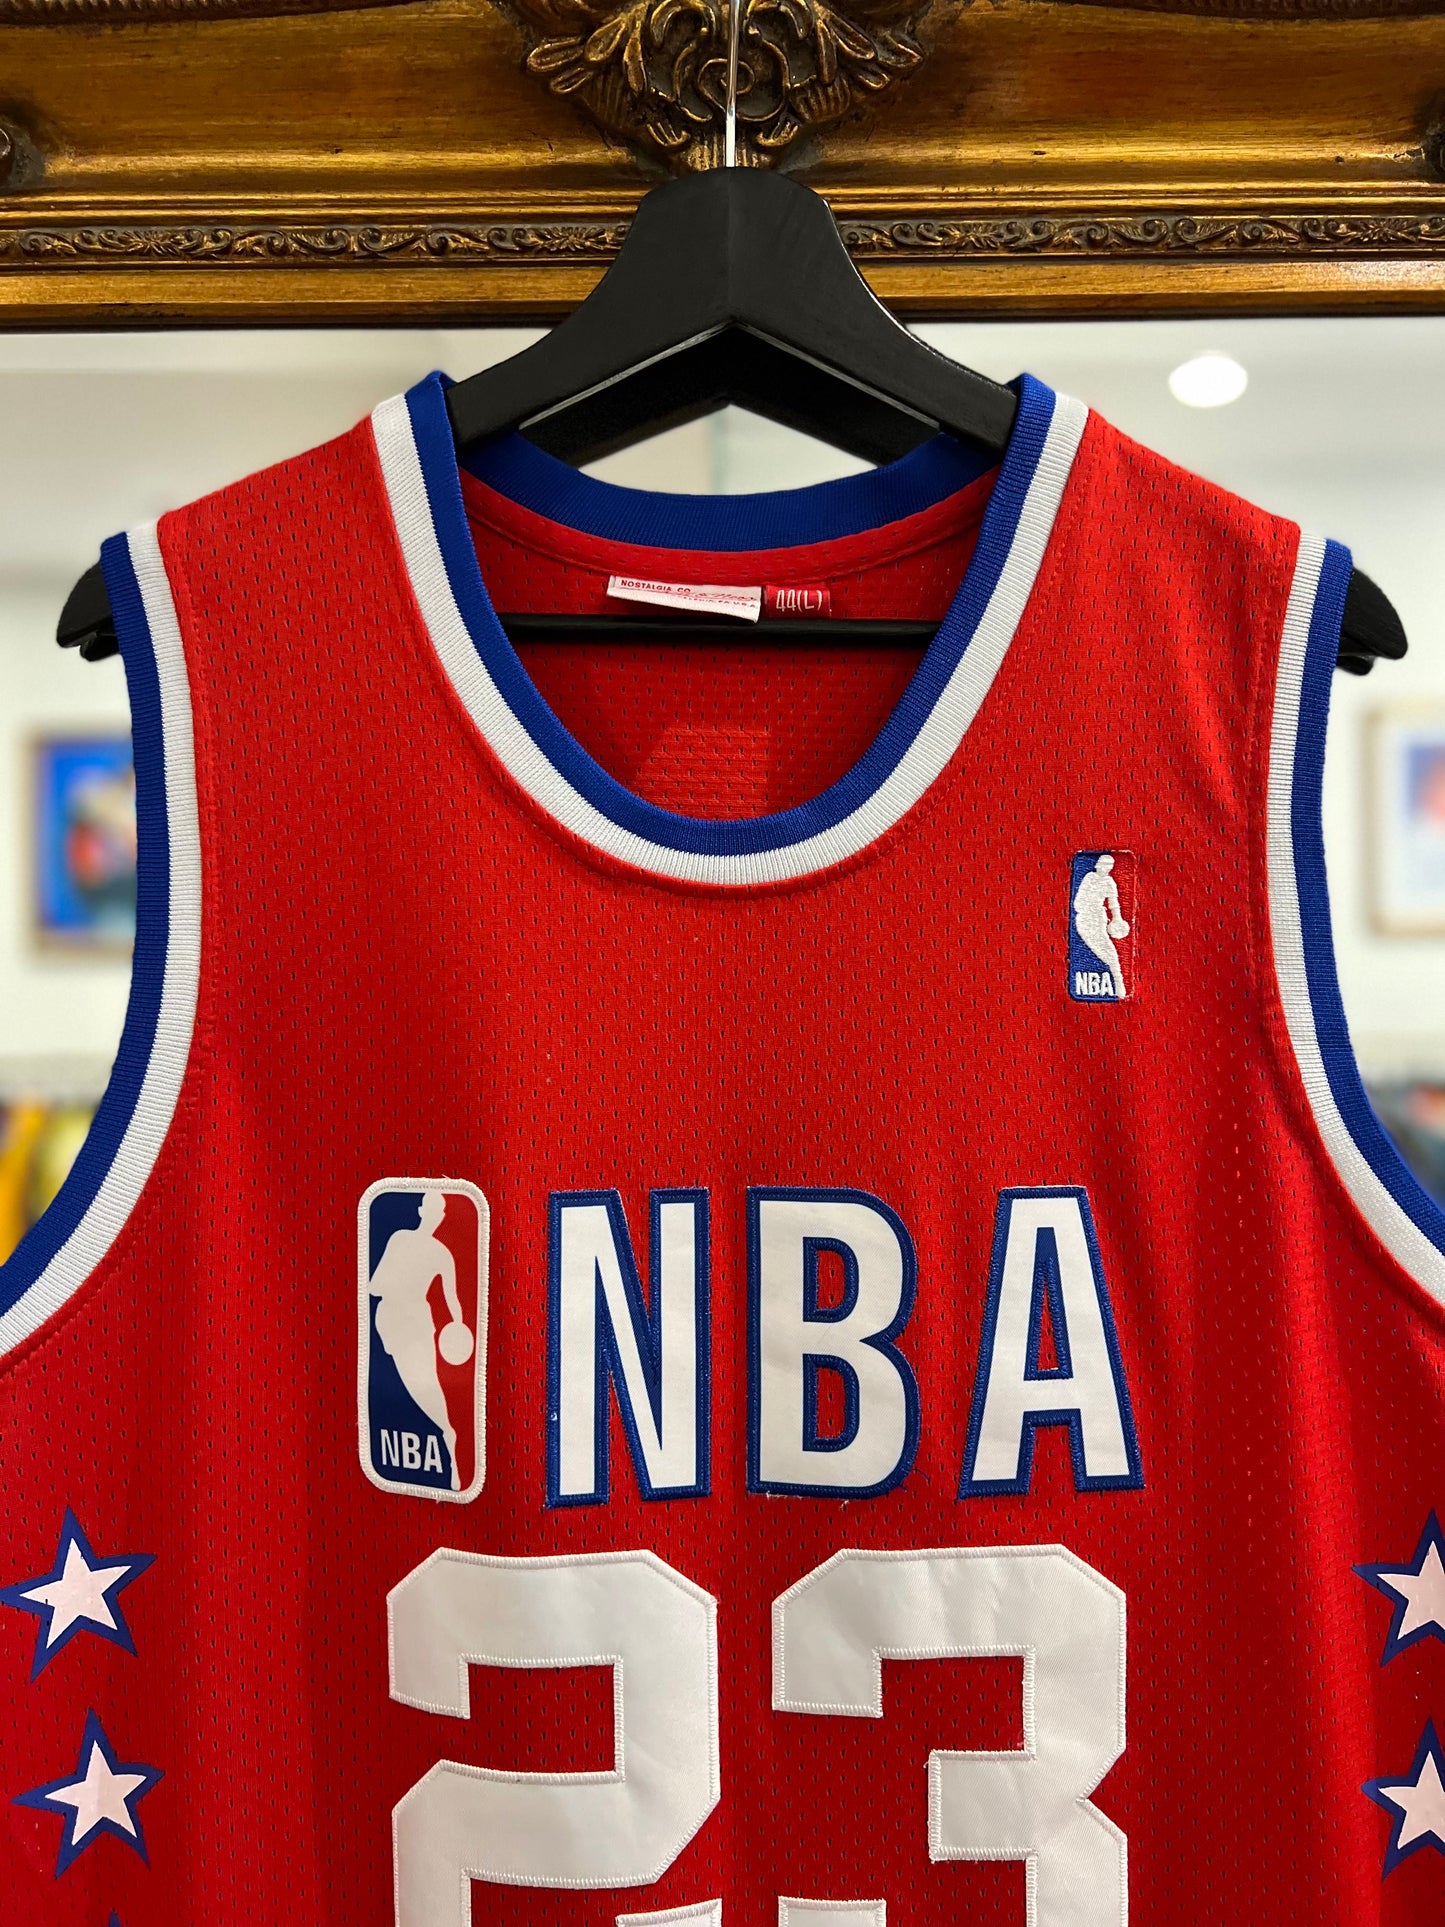 Michael Jordan All Star NBA Basketball Jersey (L)